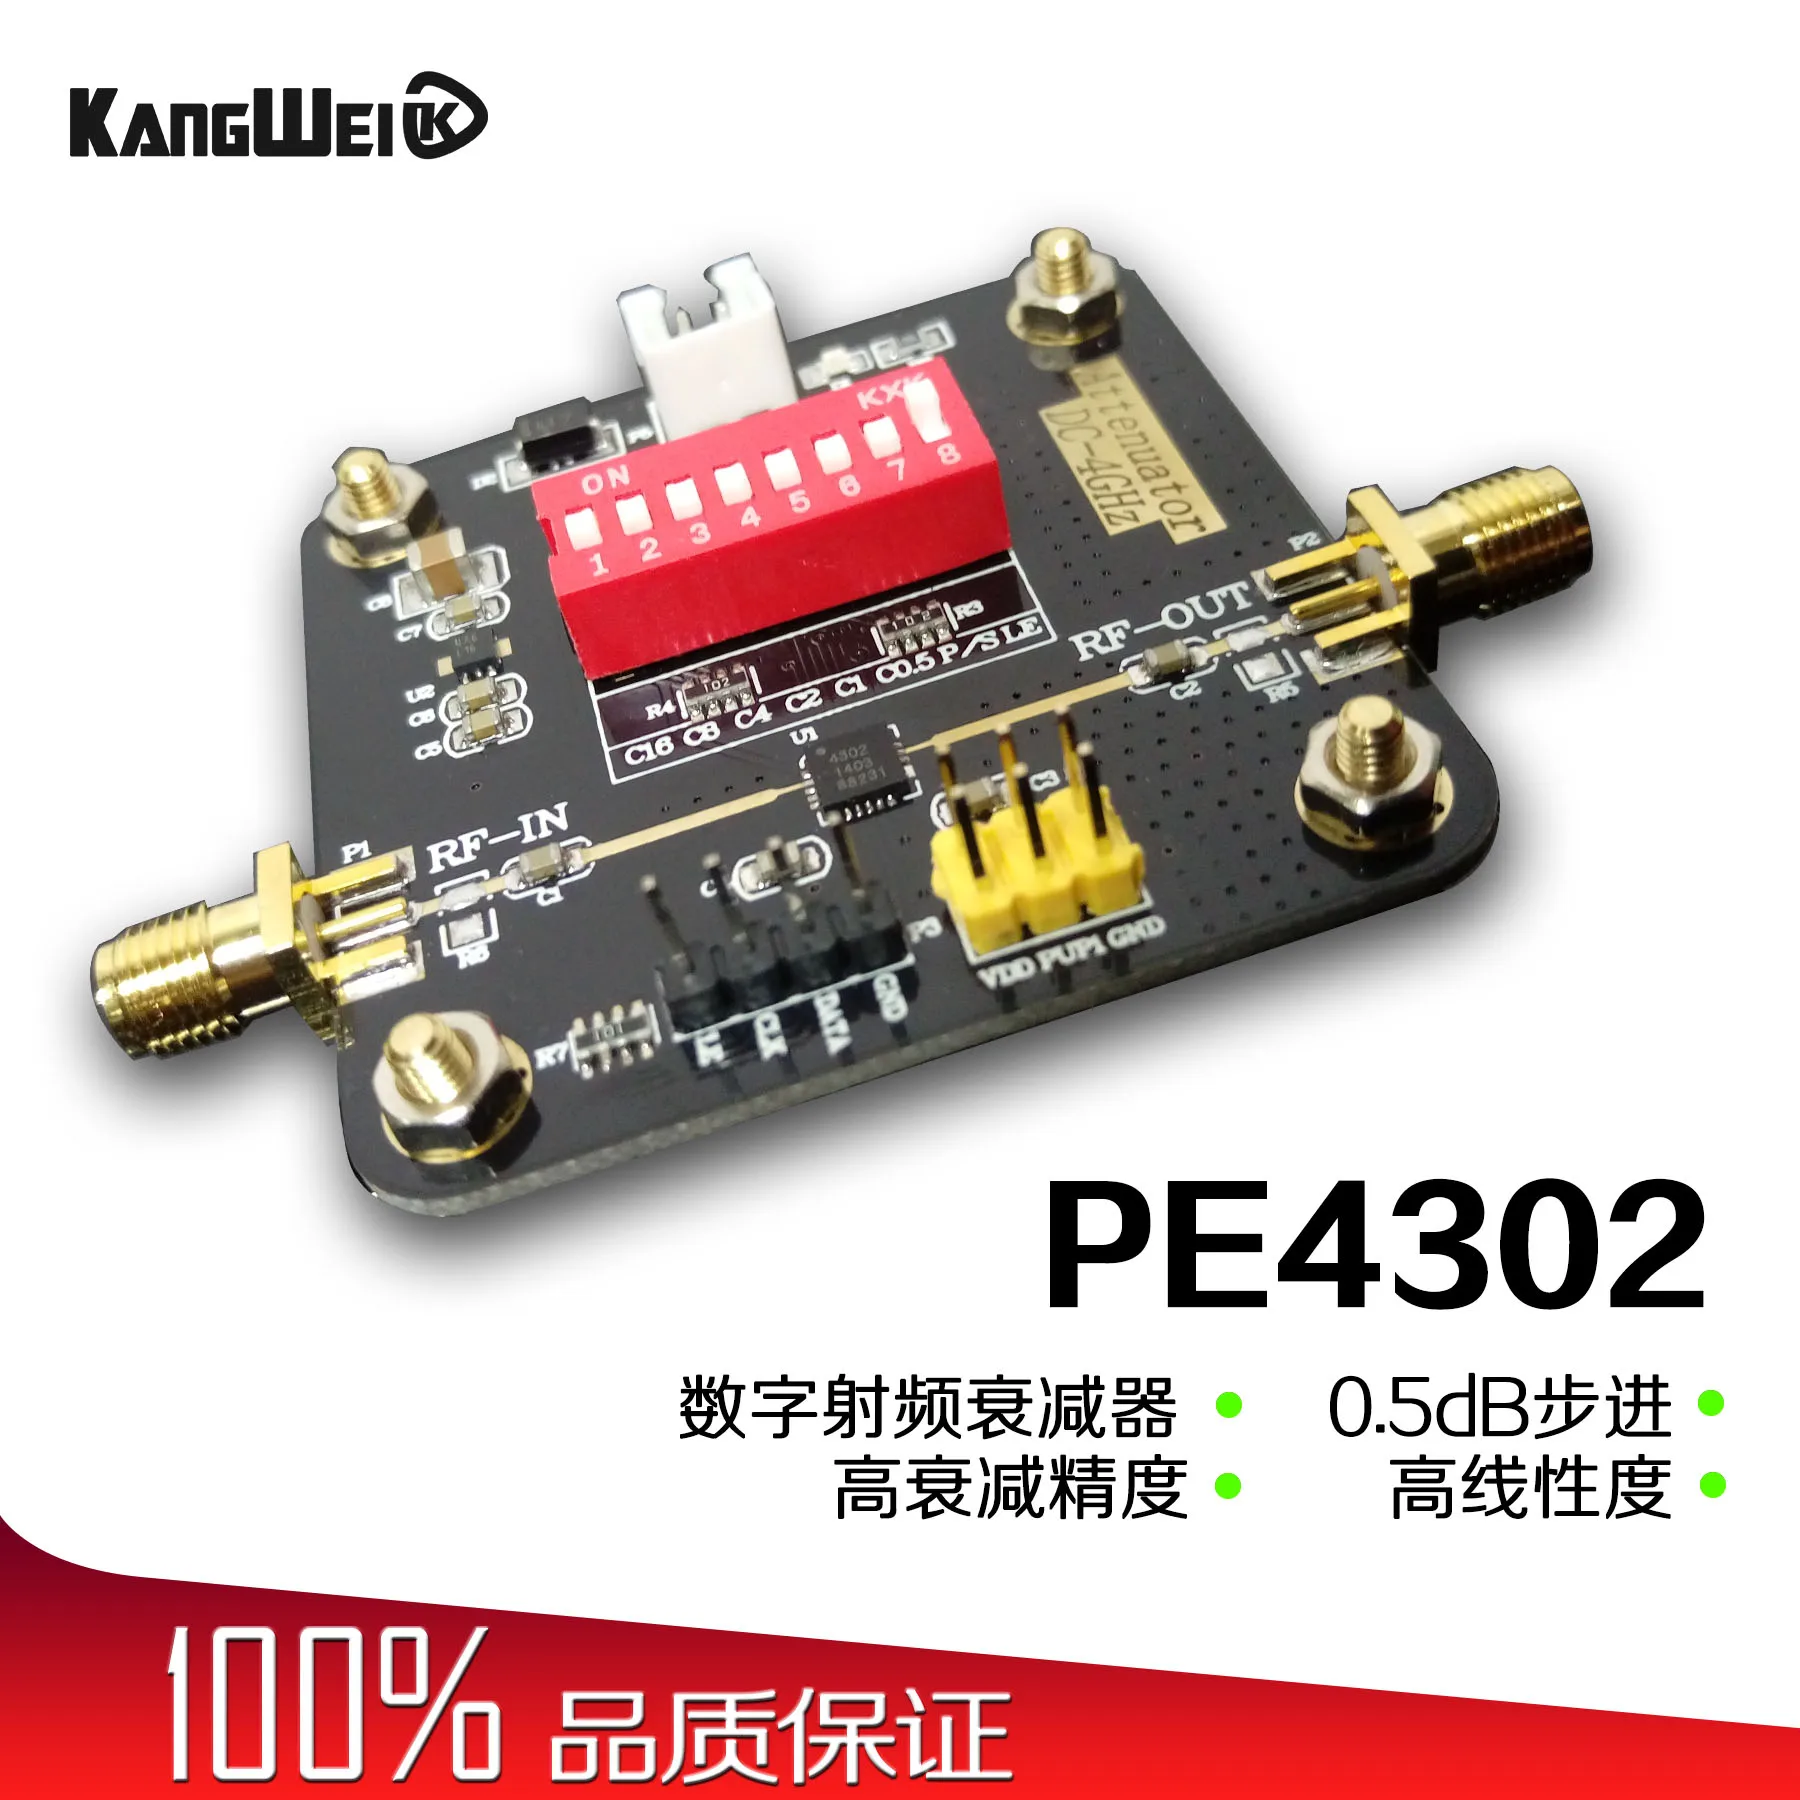 

PE4302 Digital RF Attenuator Module Broadband, High Attenuation Accuracy, High Linearity DC-4000MHz